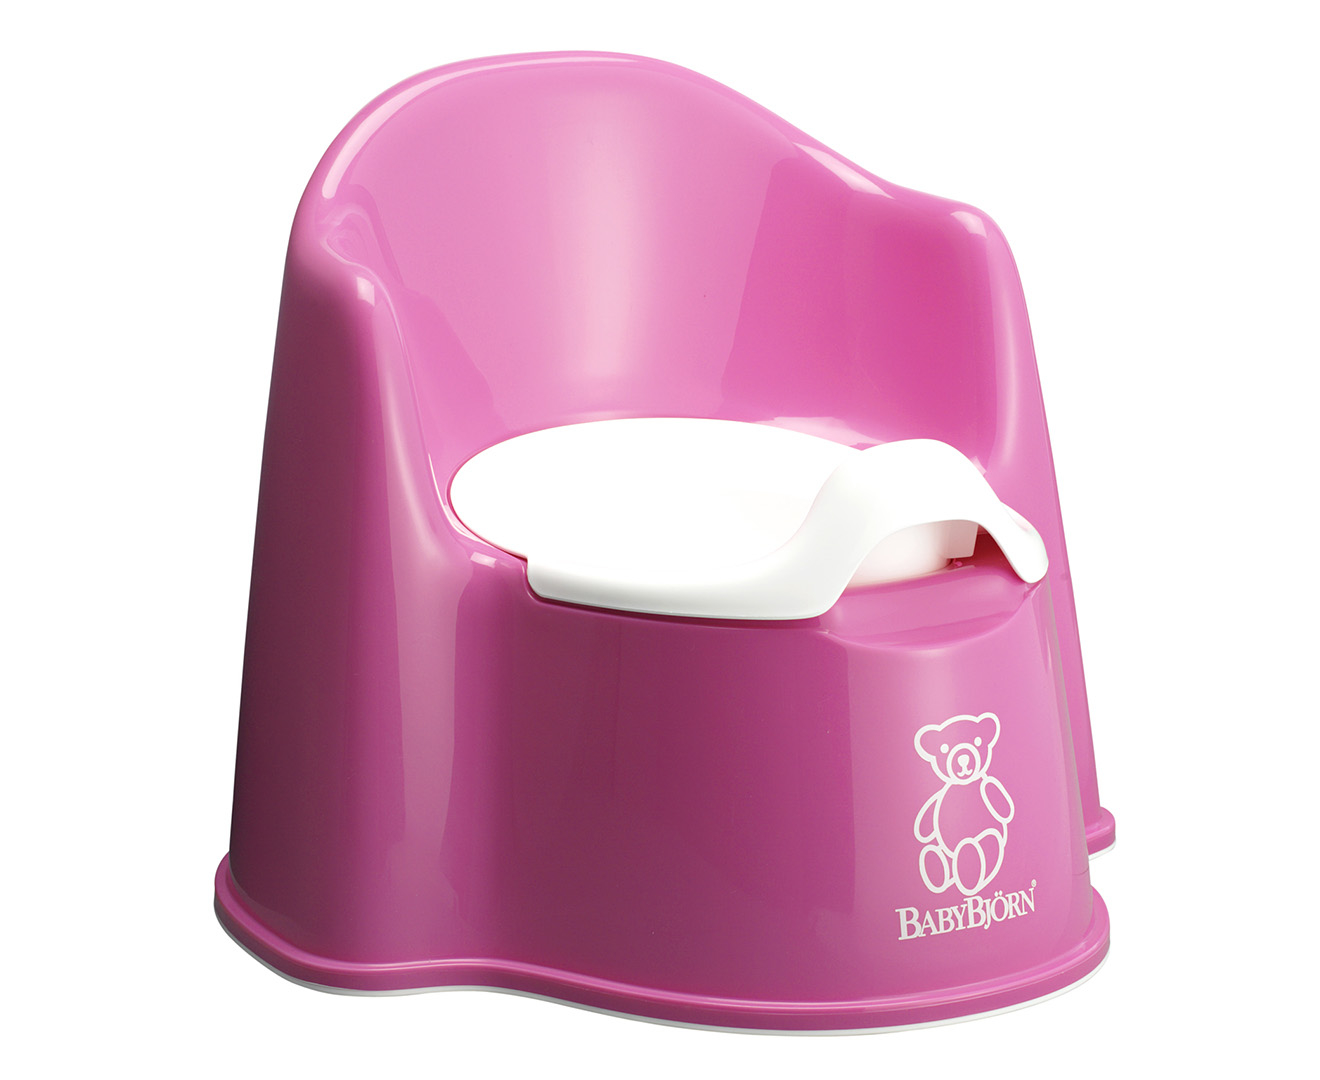 Babybjorn Potty Chair Pink Catch Com Au